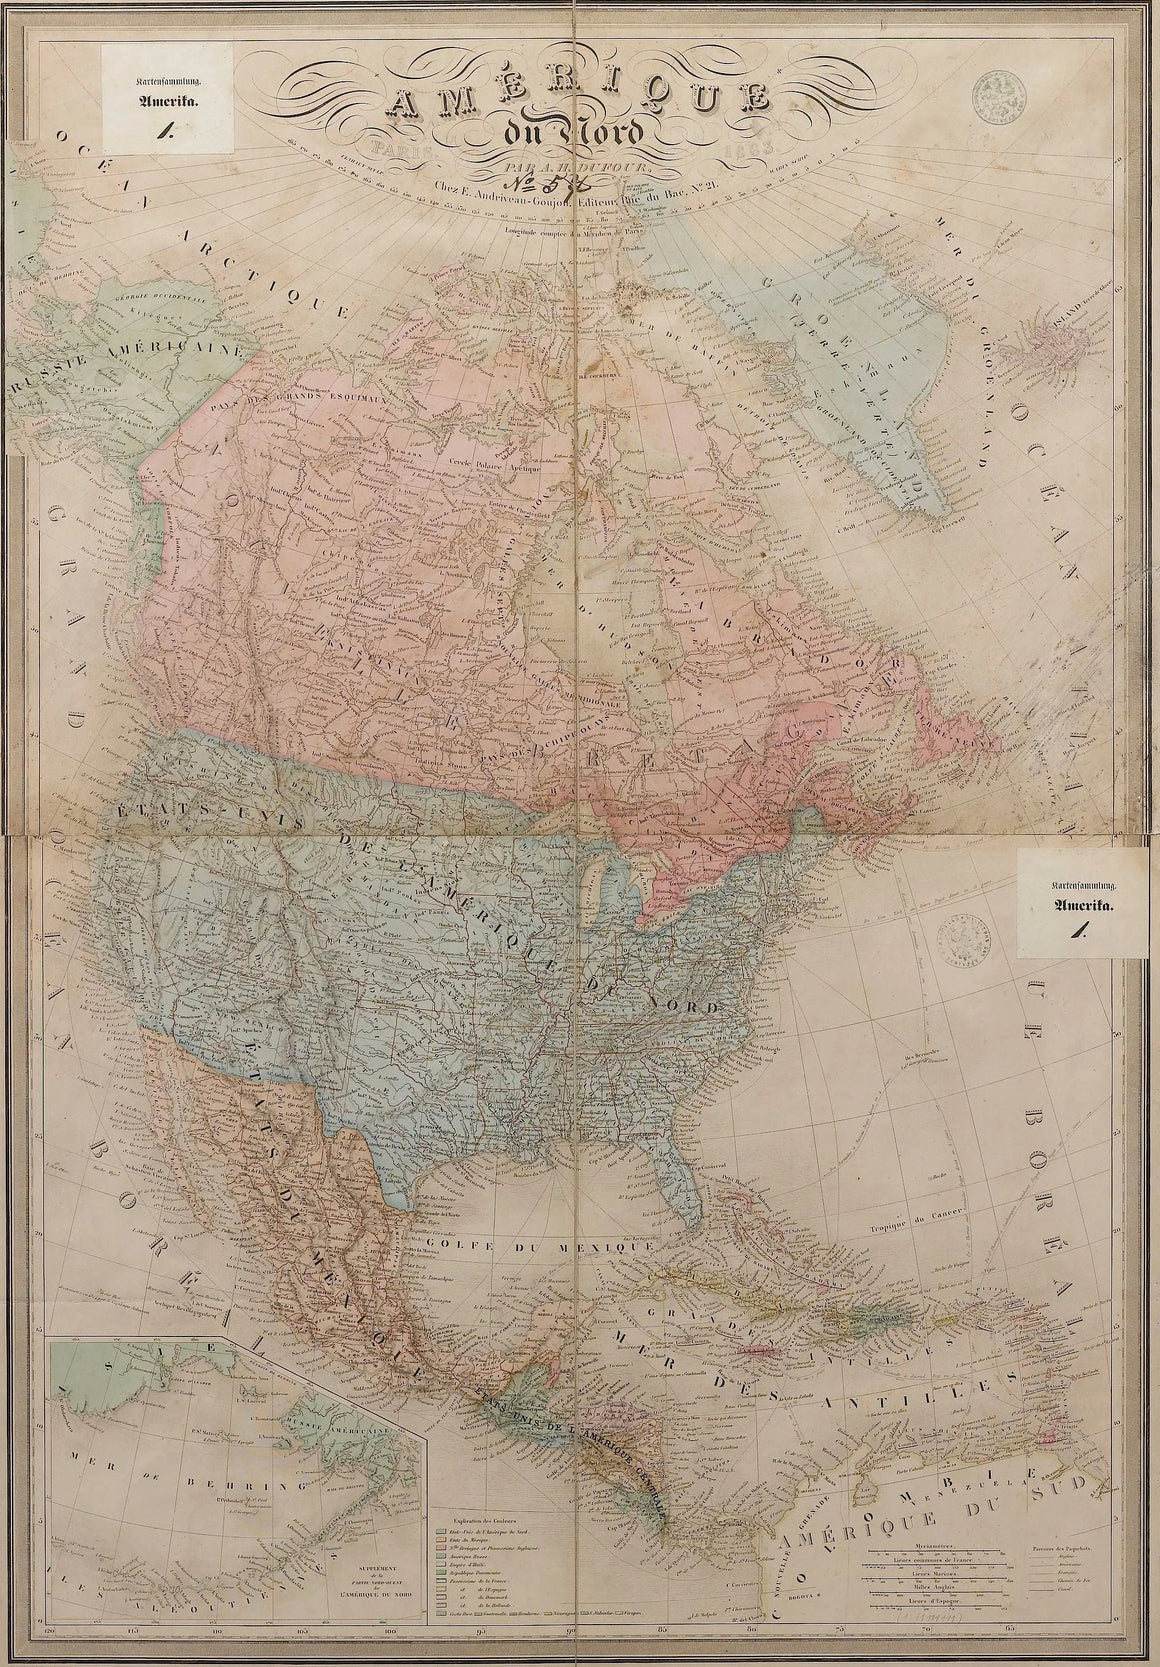 1864 "Amerique du Nord" by Adolphe Hippolyte Dufour